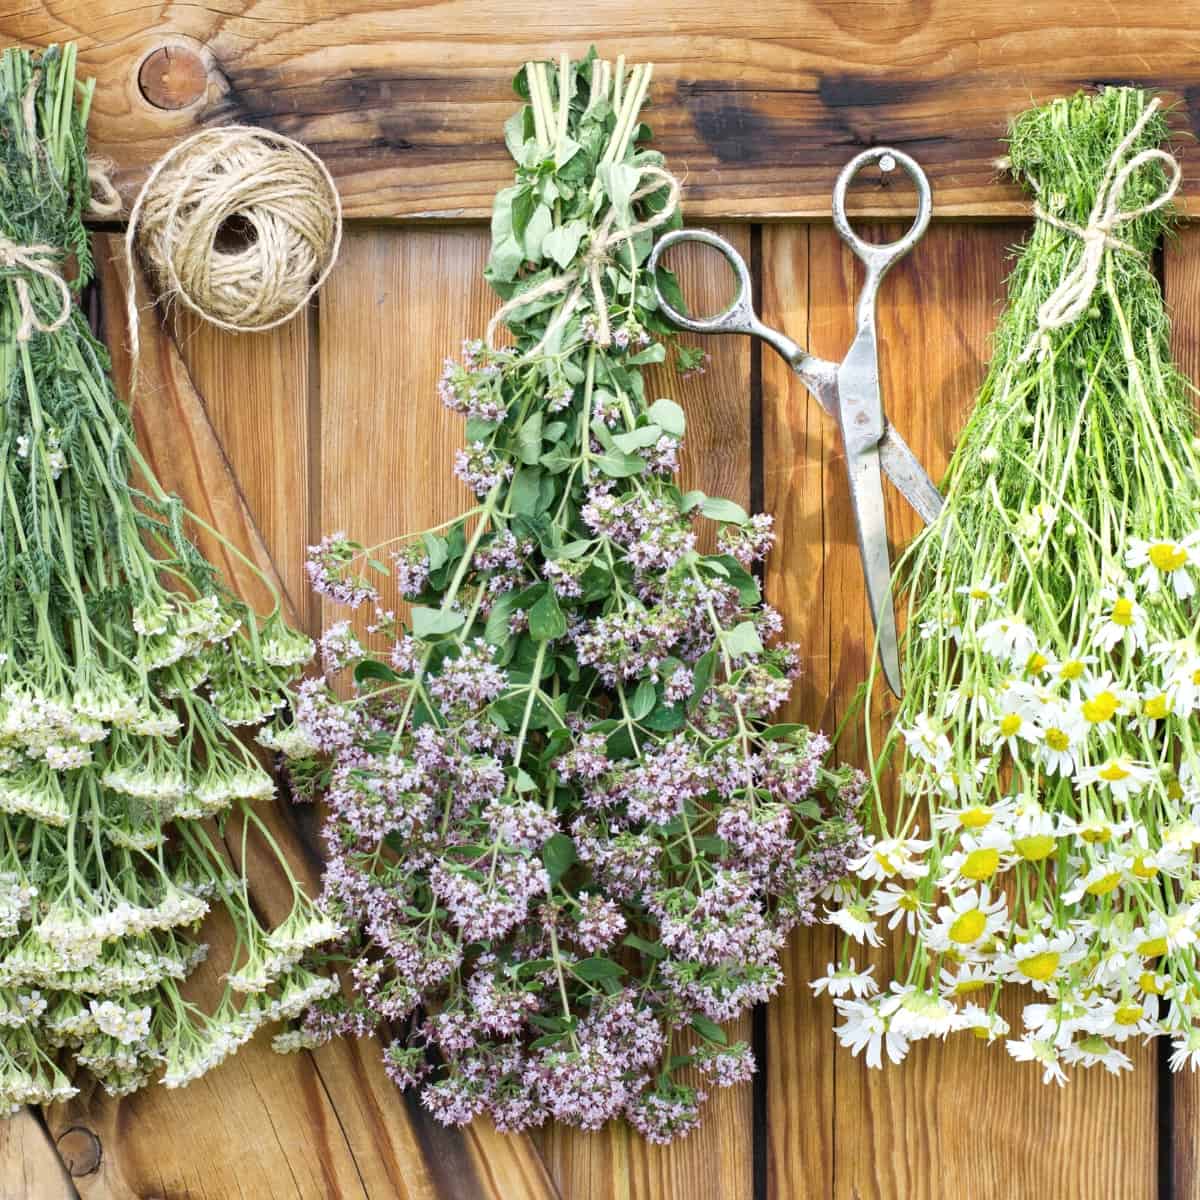 Bundles of fresh herbs hanging upside down preparing for air drying.